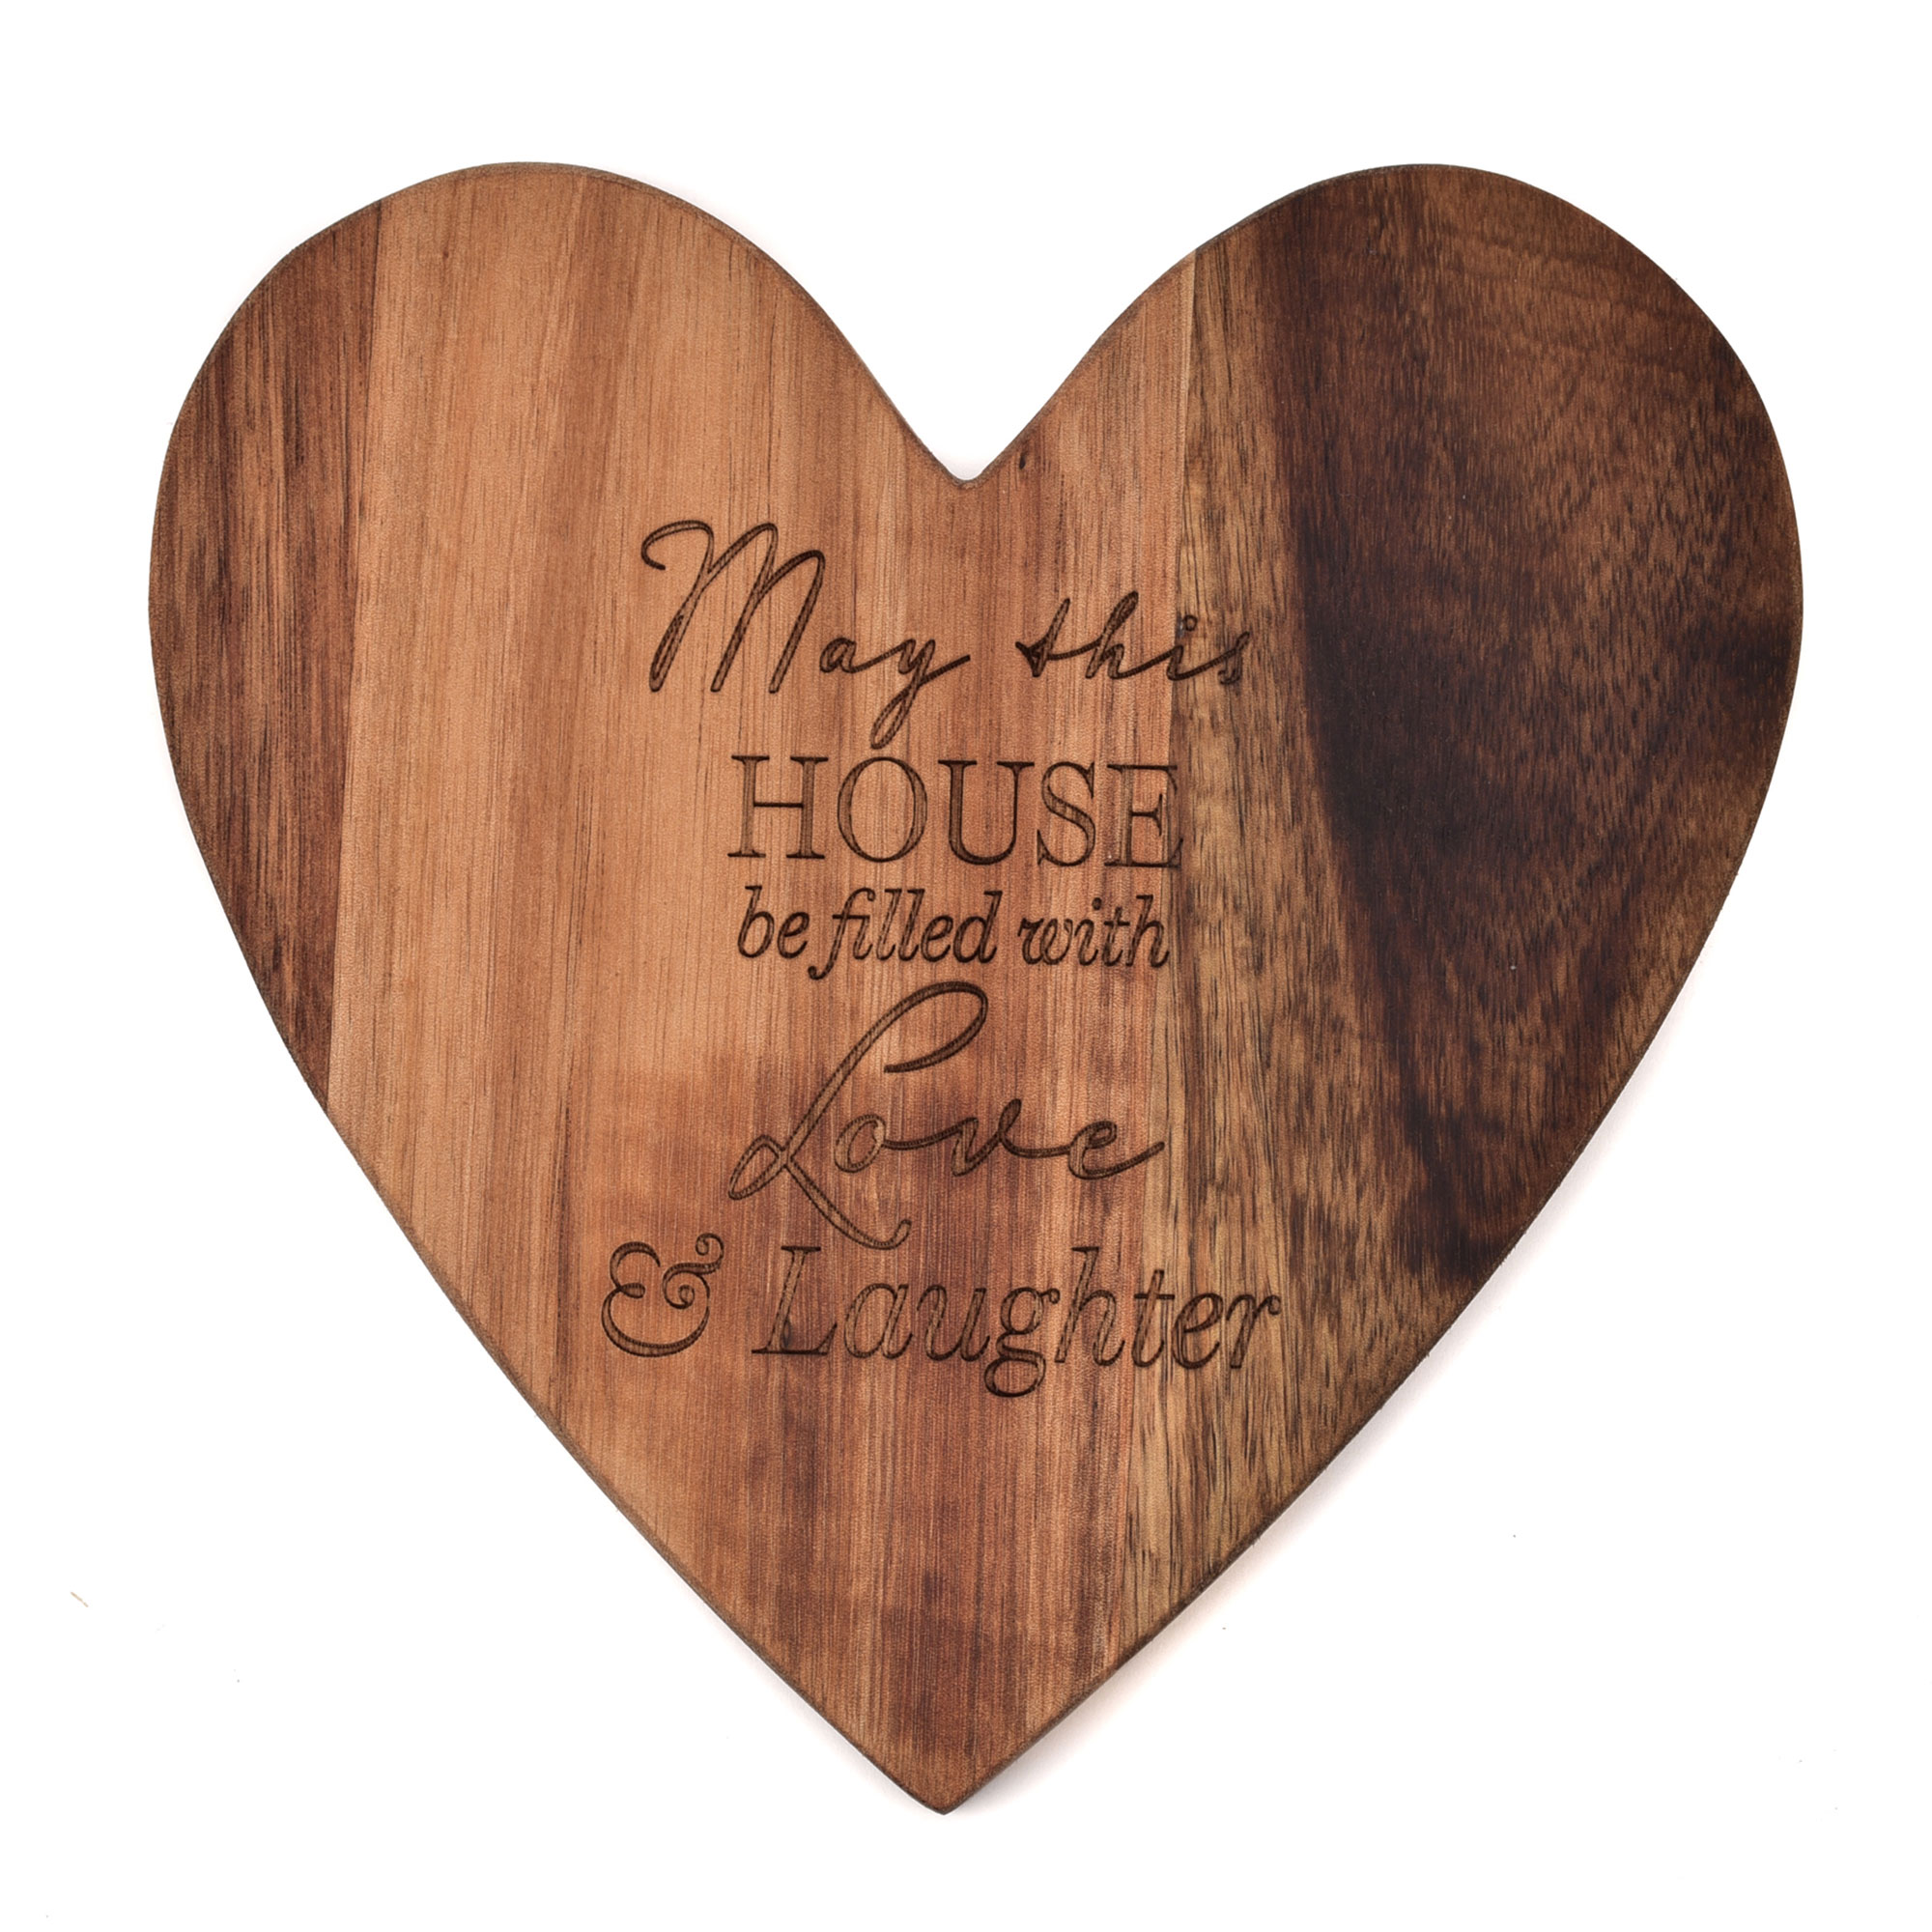 Mr & Mrs Wooden Cheeseboard Gift Set